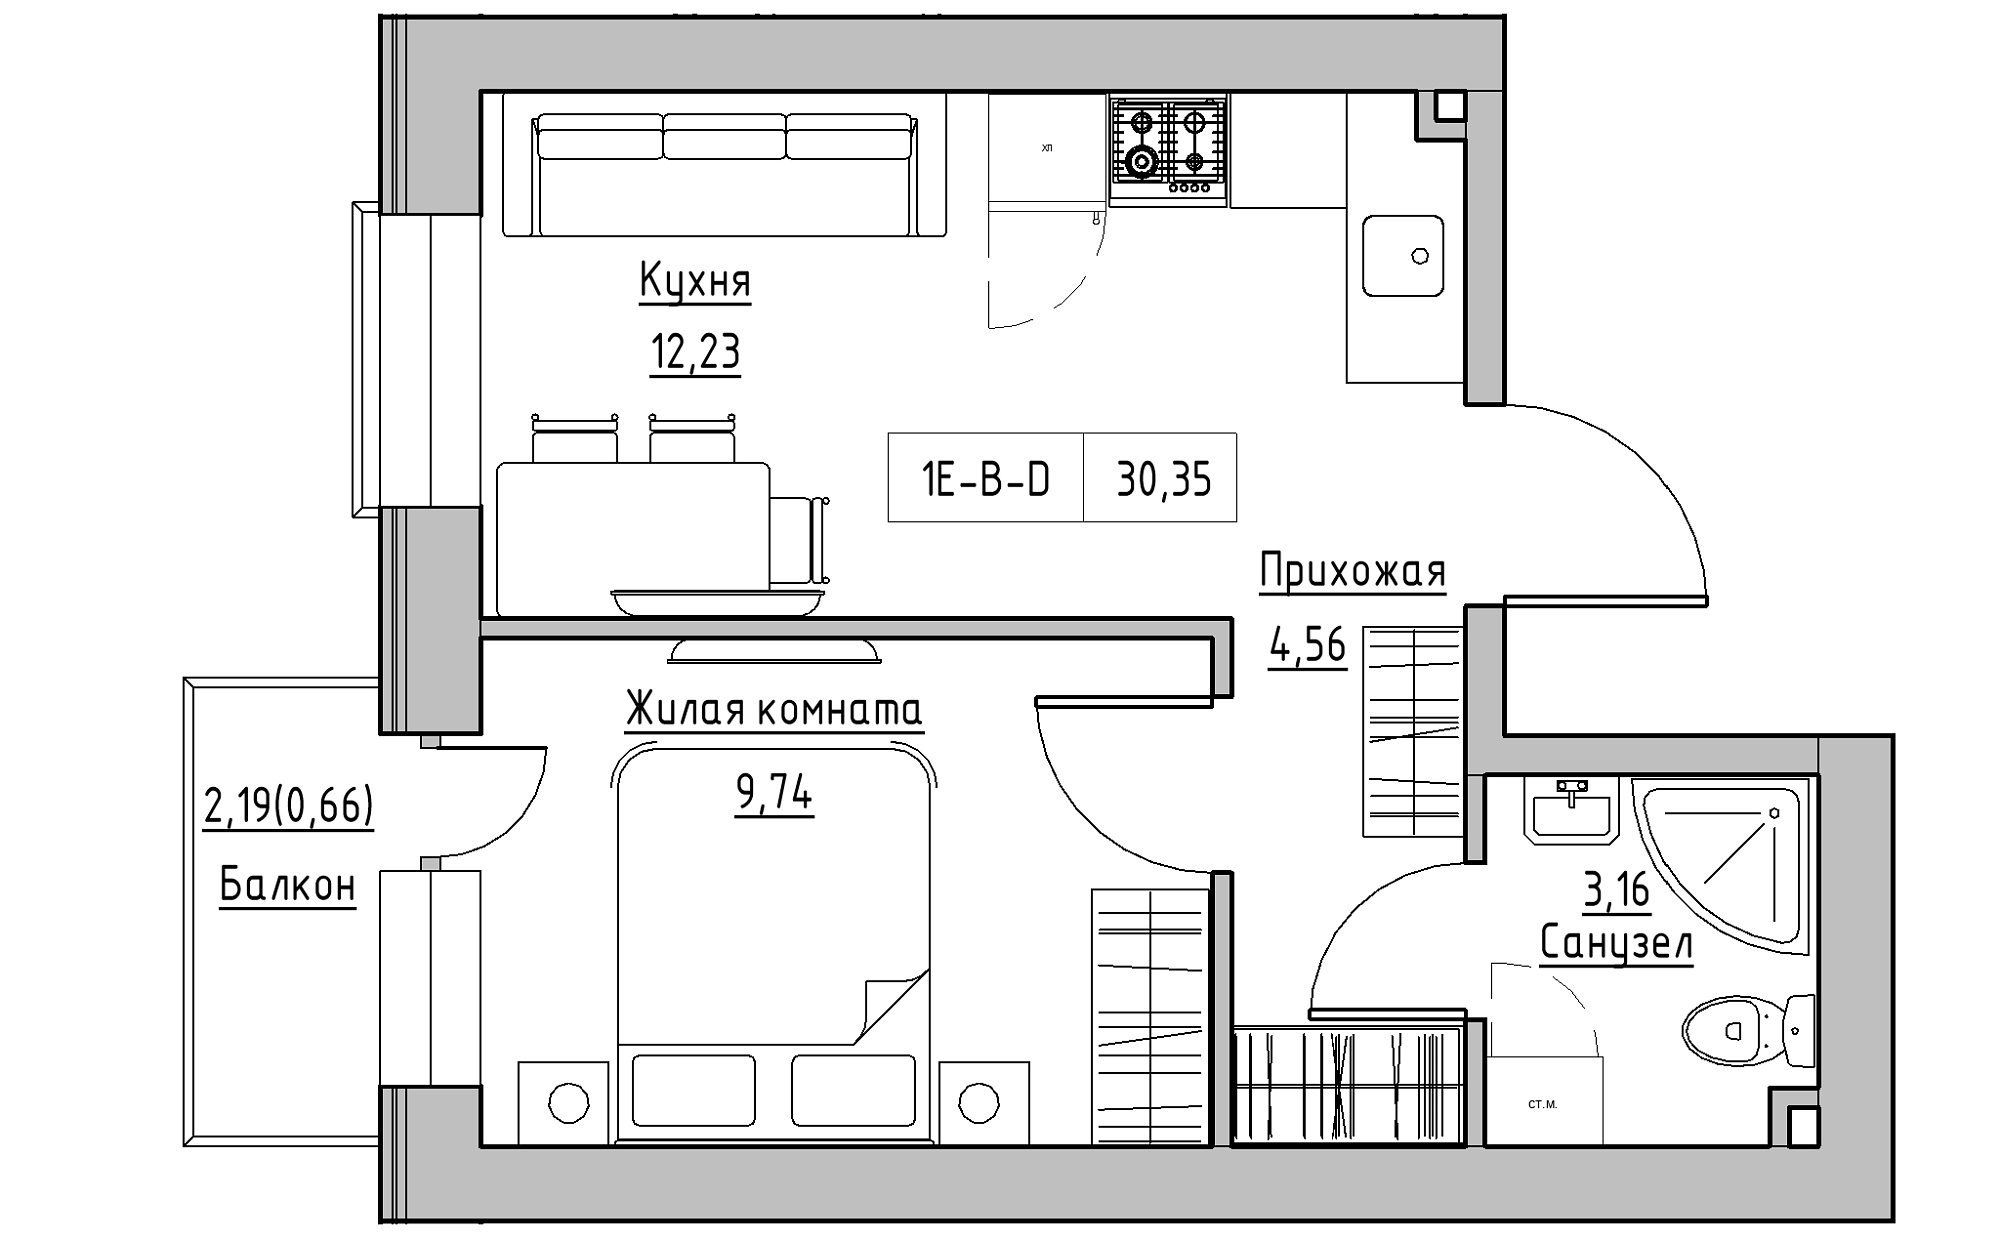 Planning 1-rm flats area 30.35m2, KS-022-04/0012.